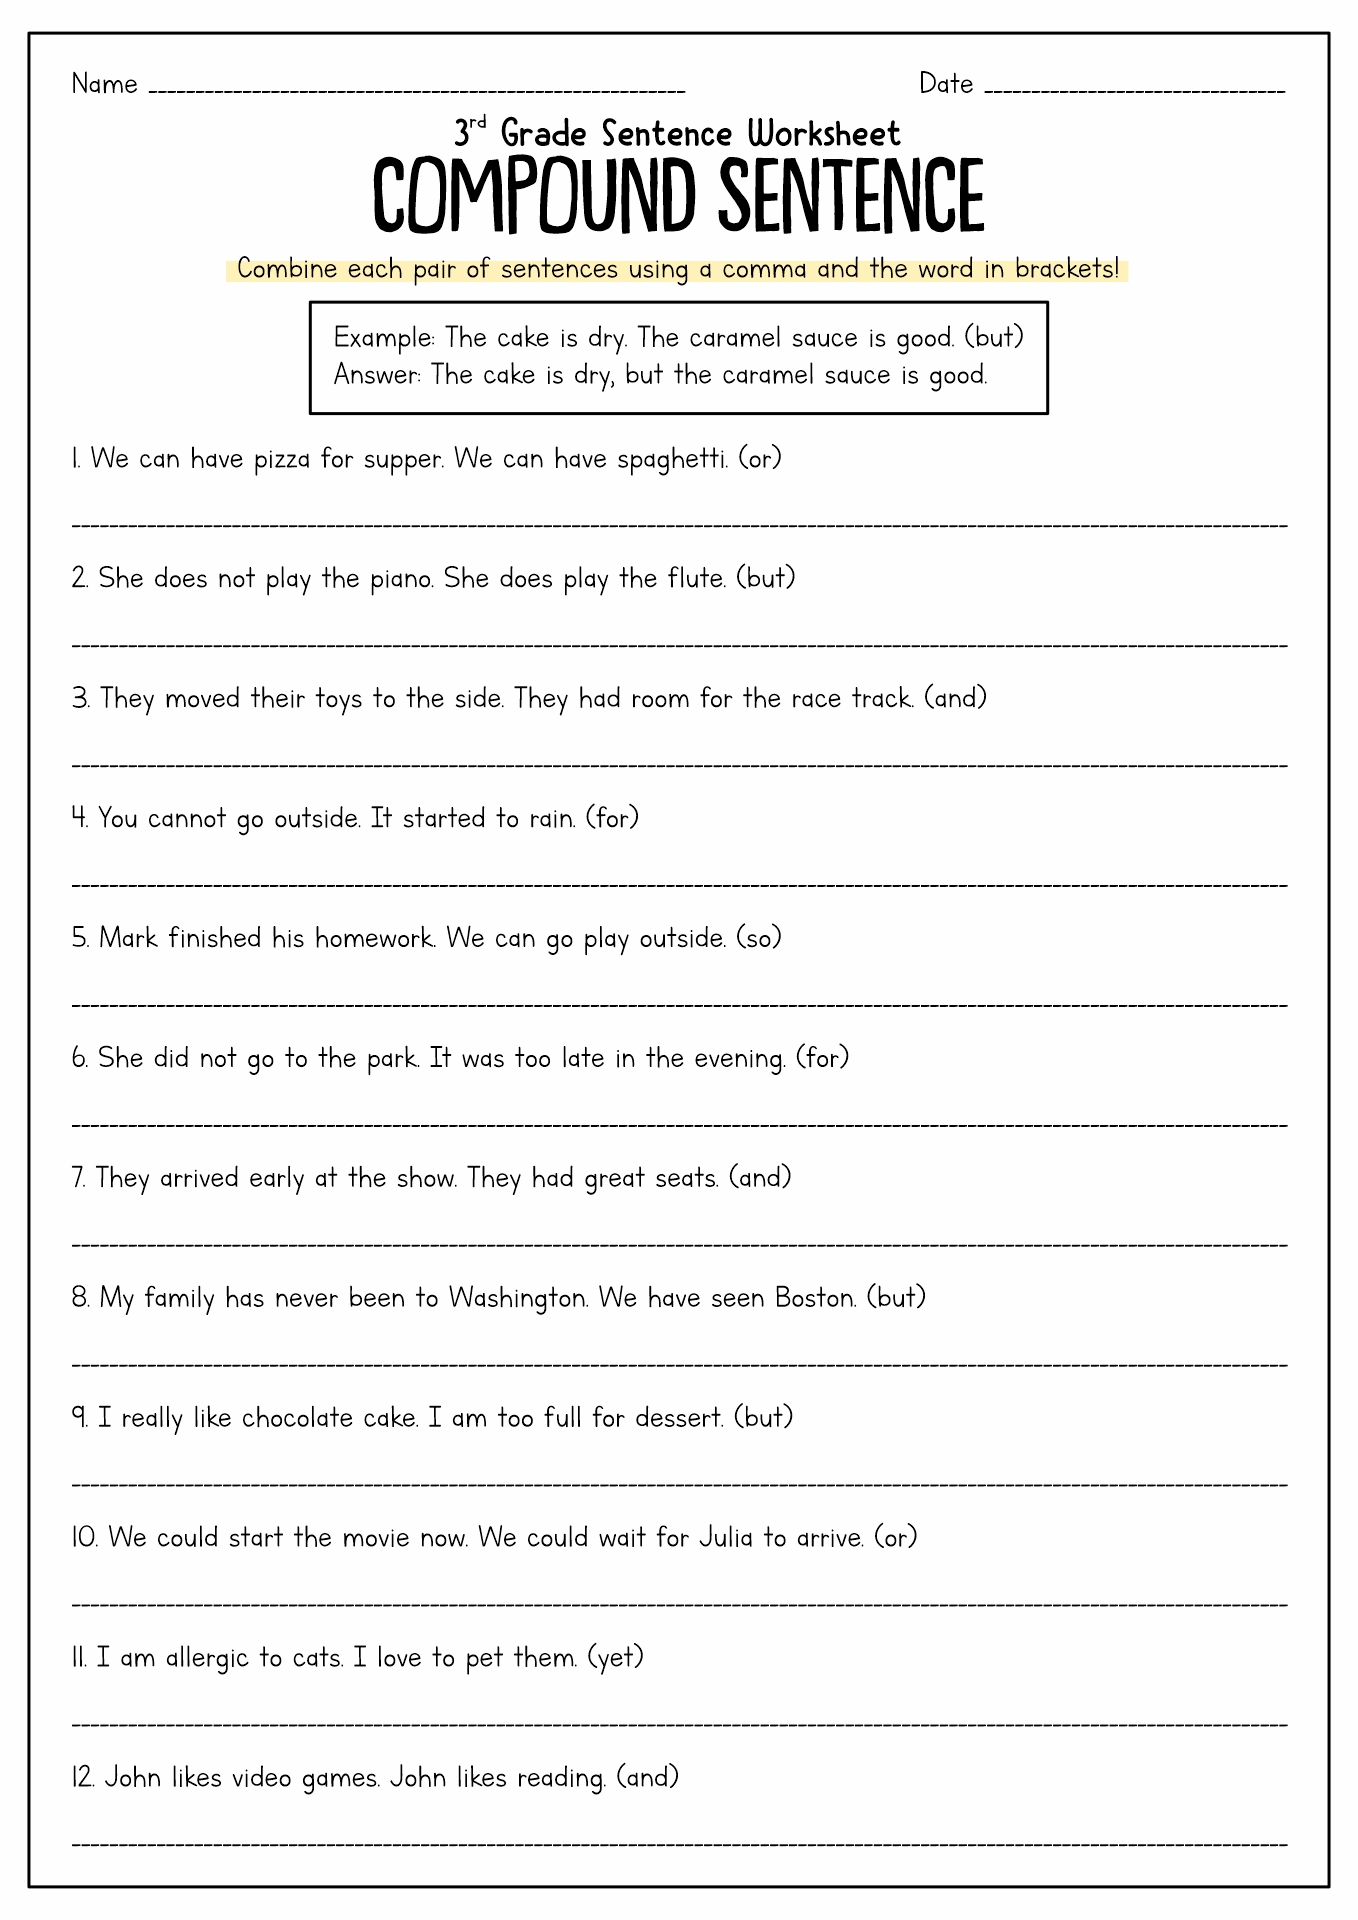 Creating Compound Sentences Worksheets Image